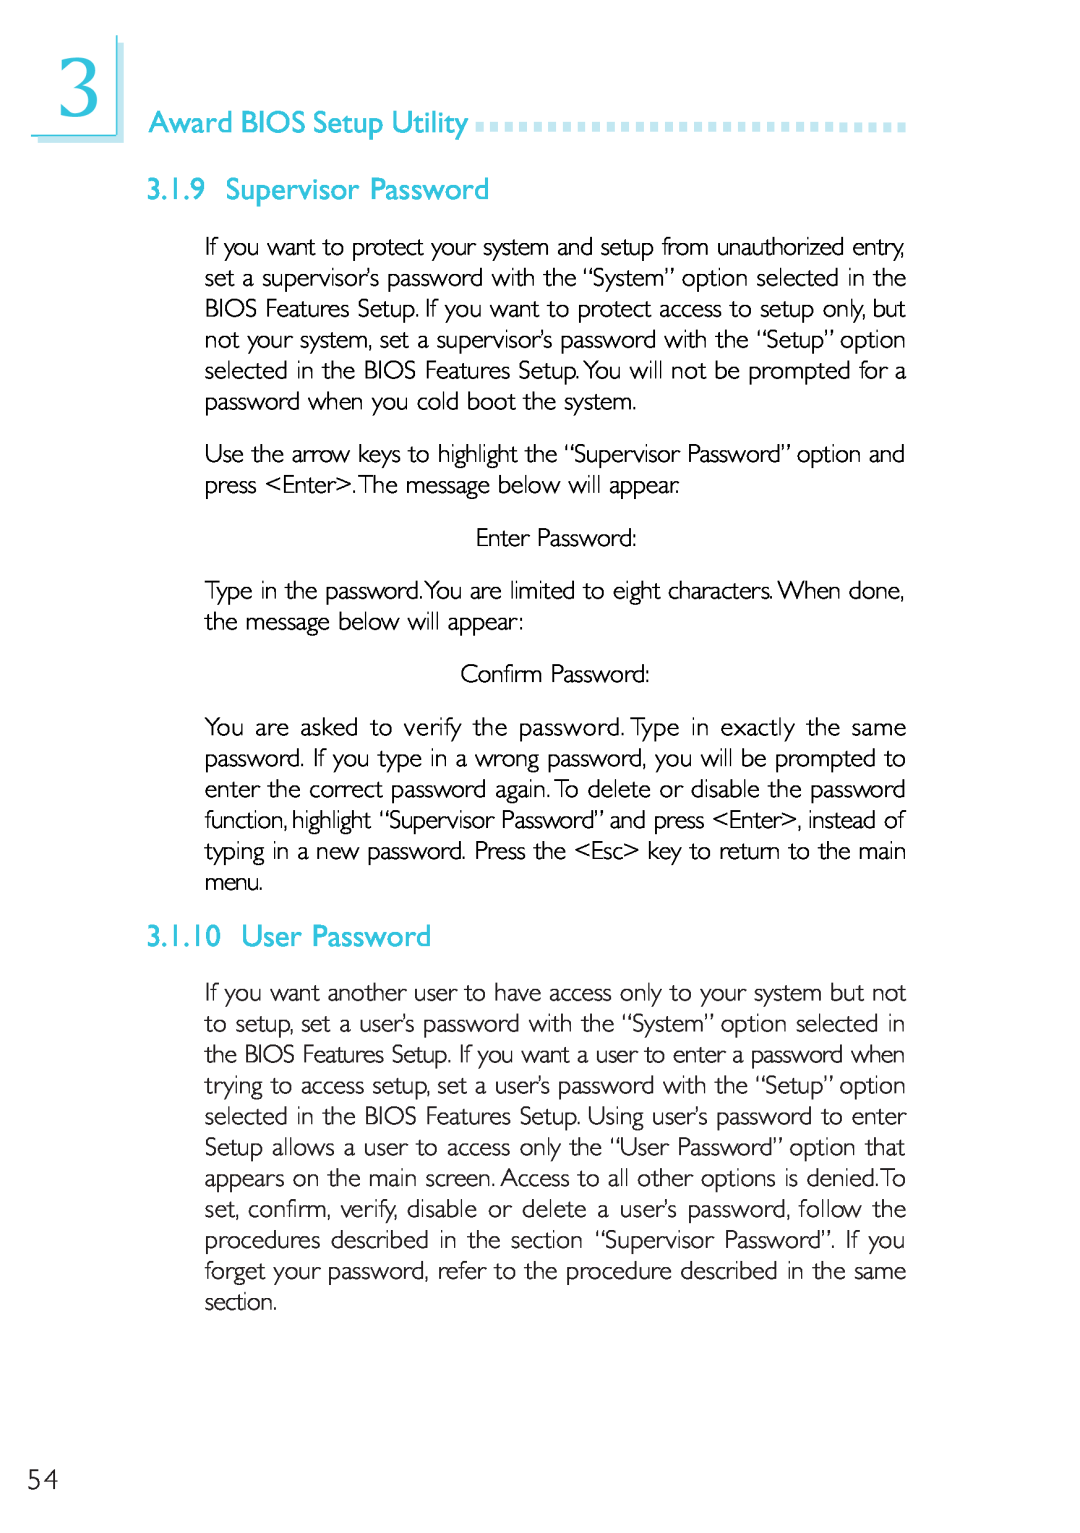 Microsoft G7VP2 manual Award BIOS Setup Utility 3.1.9 Supervisor Password, User Password 